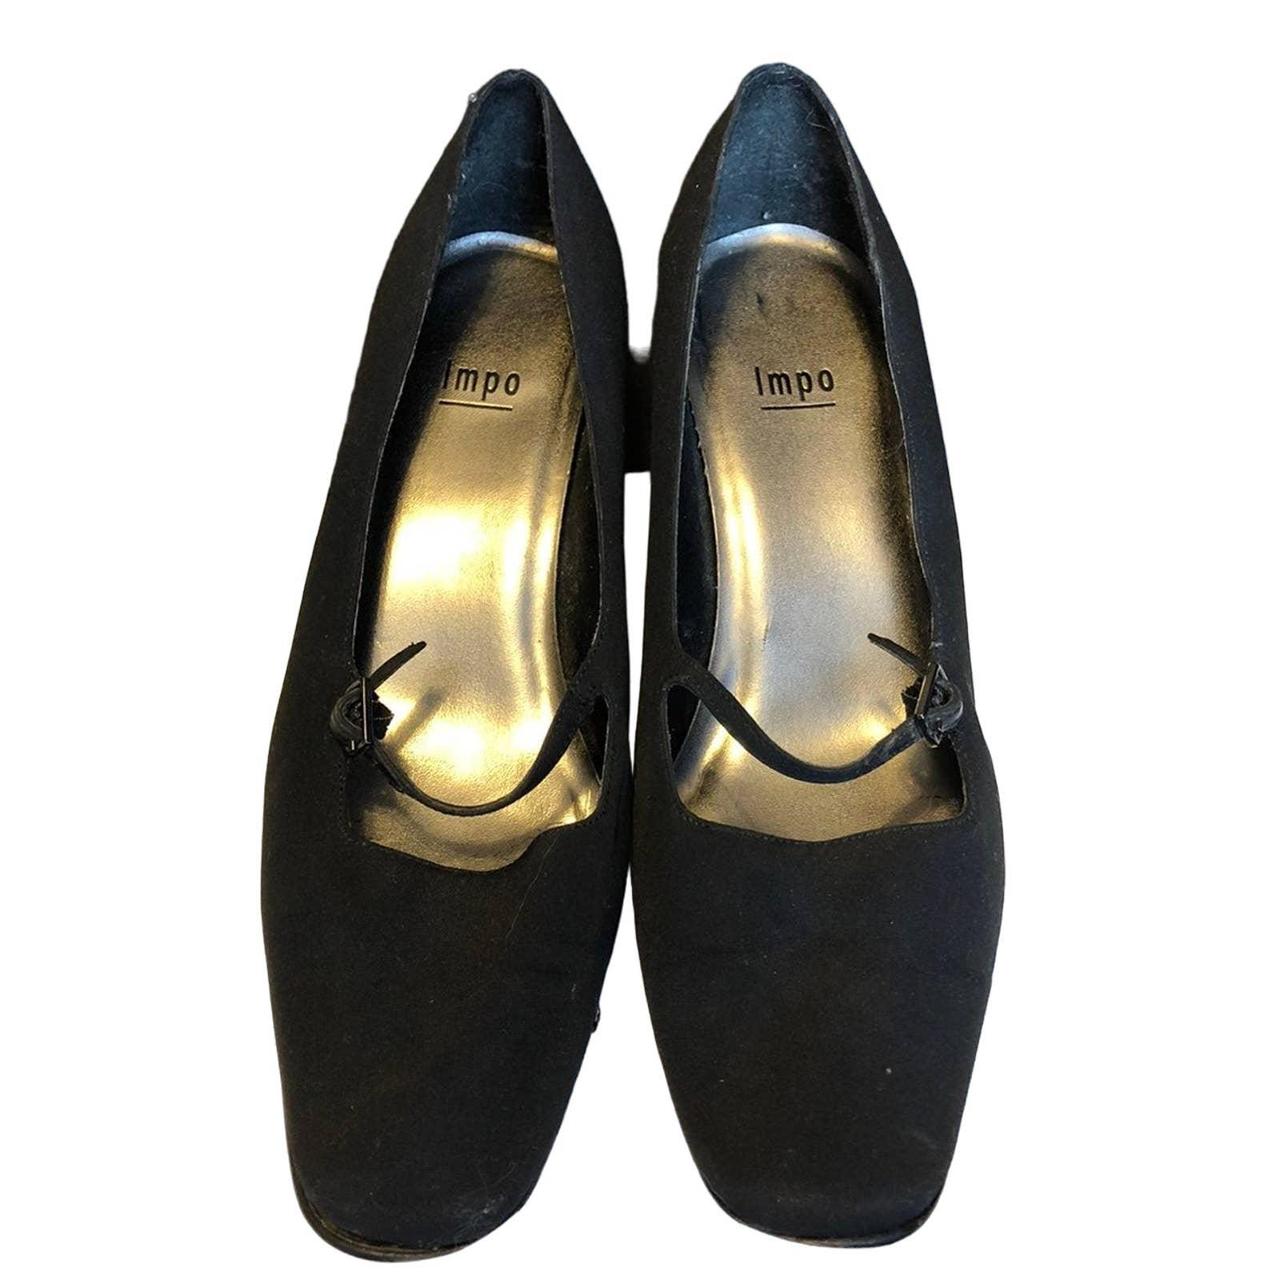 Impo Women's Black Boat-shoes